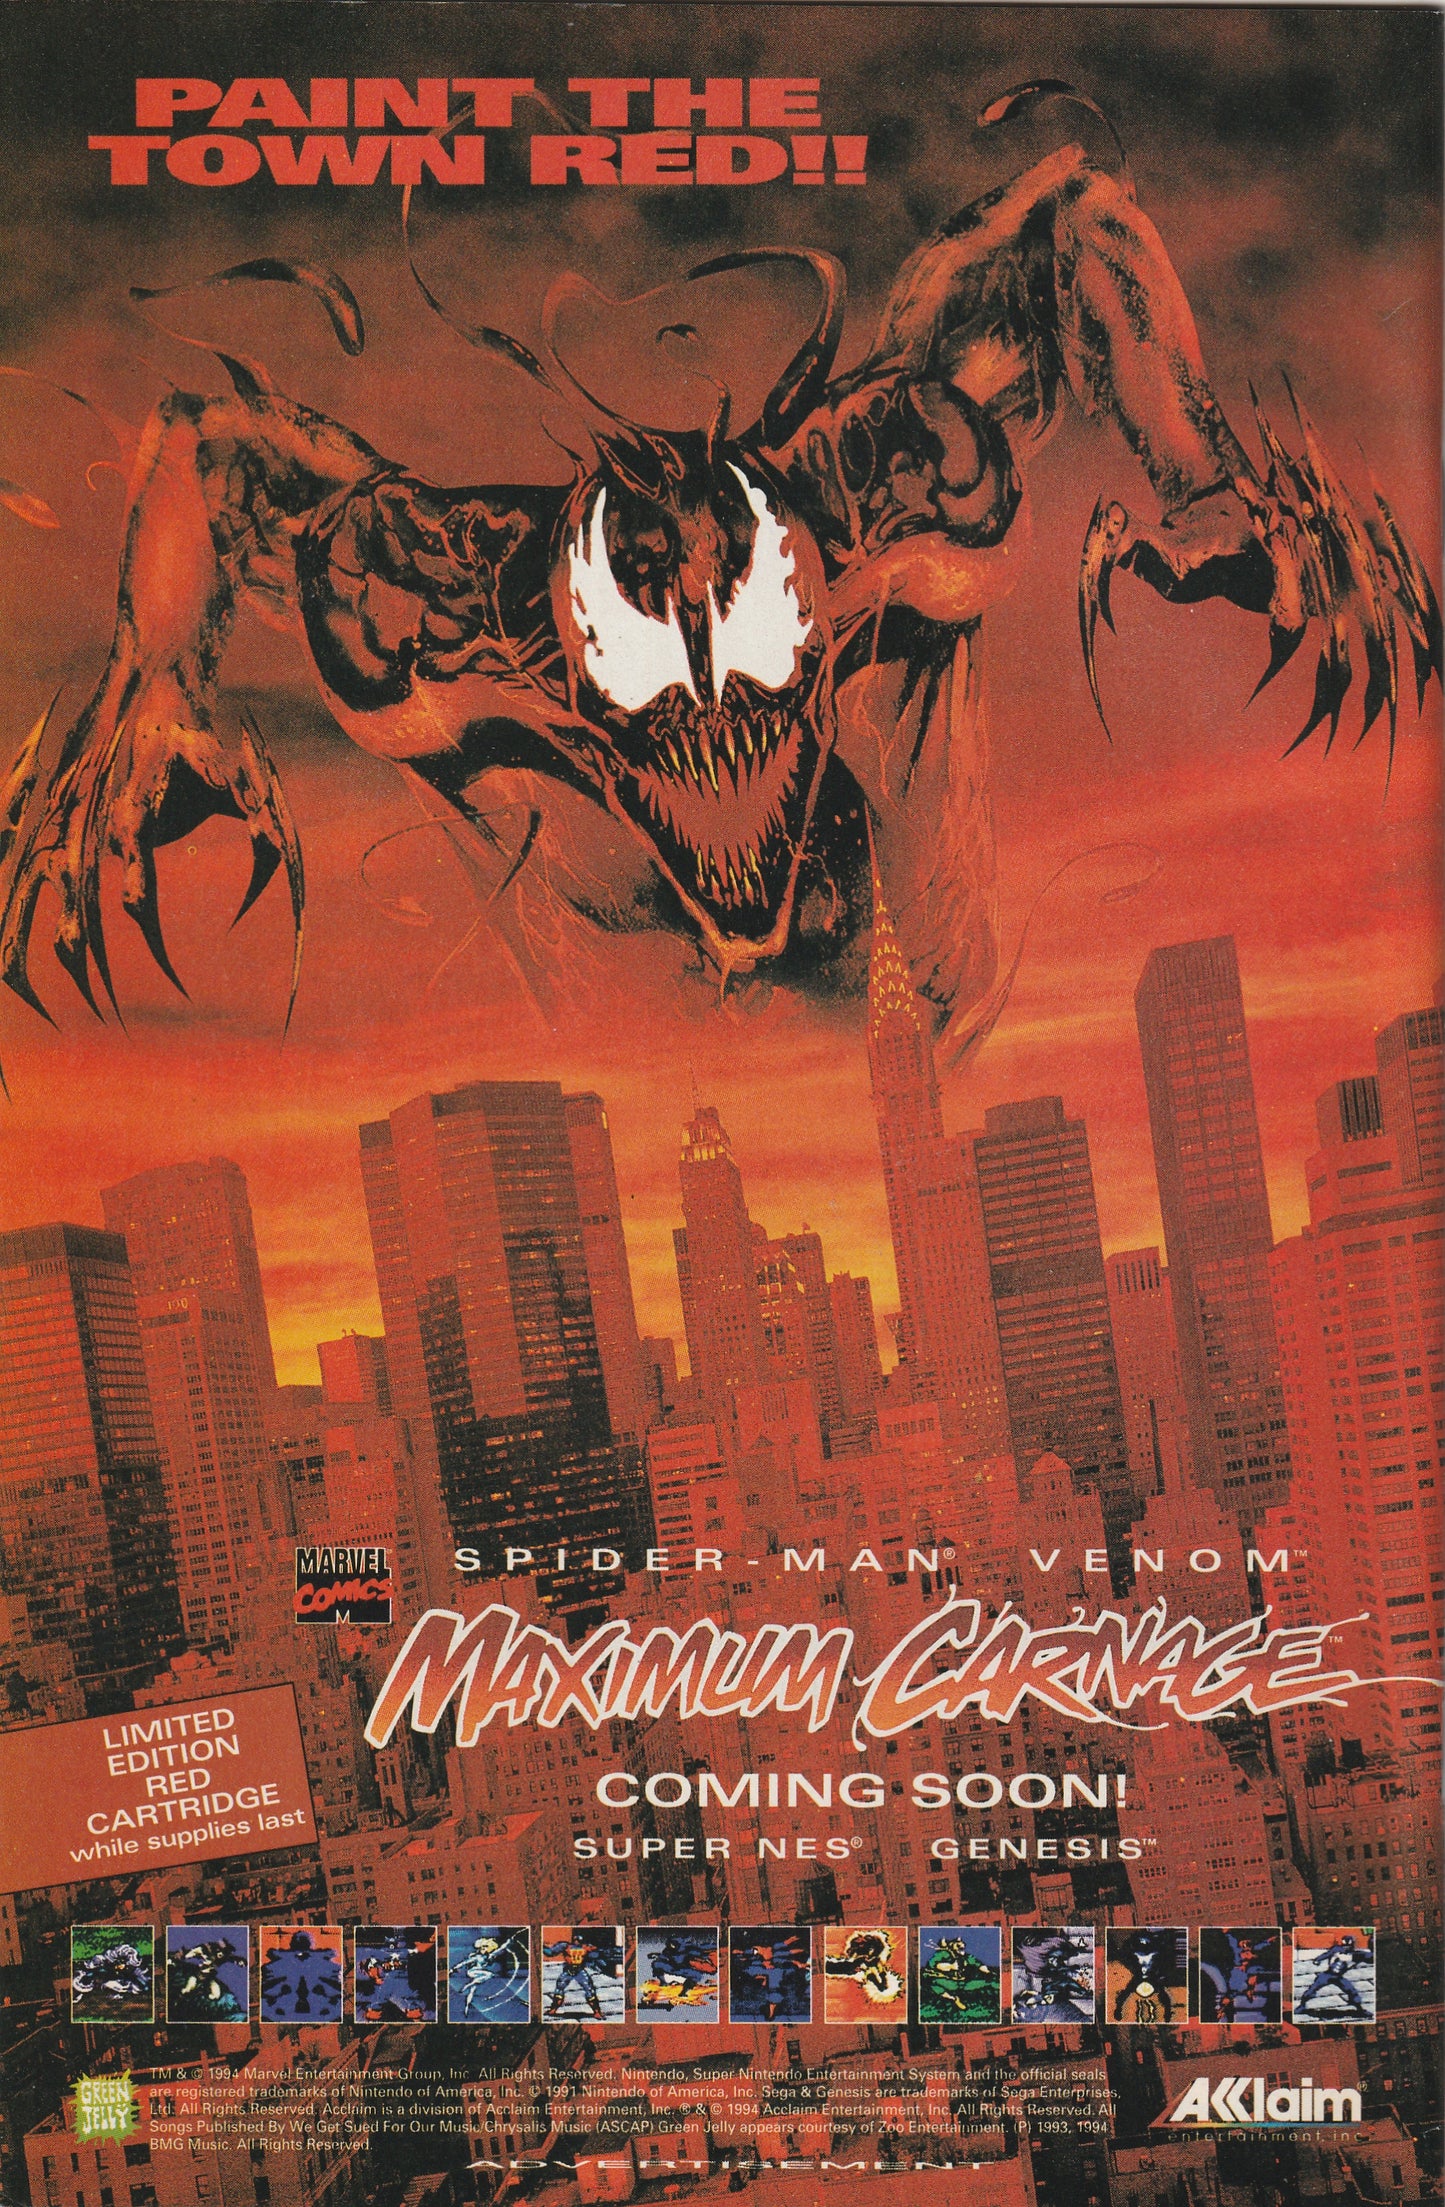 Punisher 2099 #19 (1994)